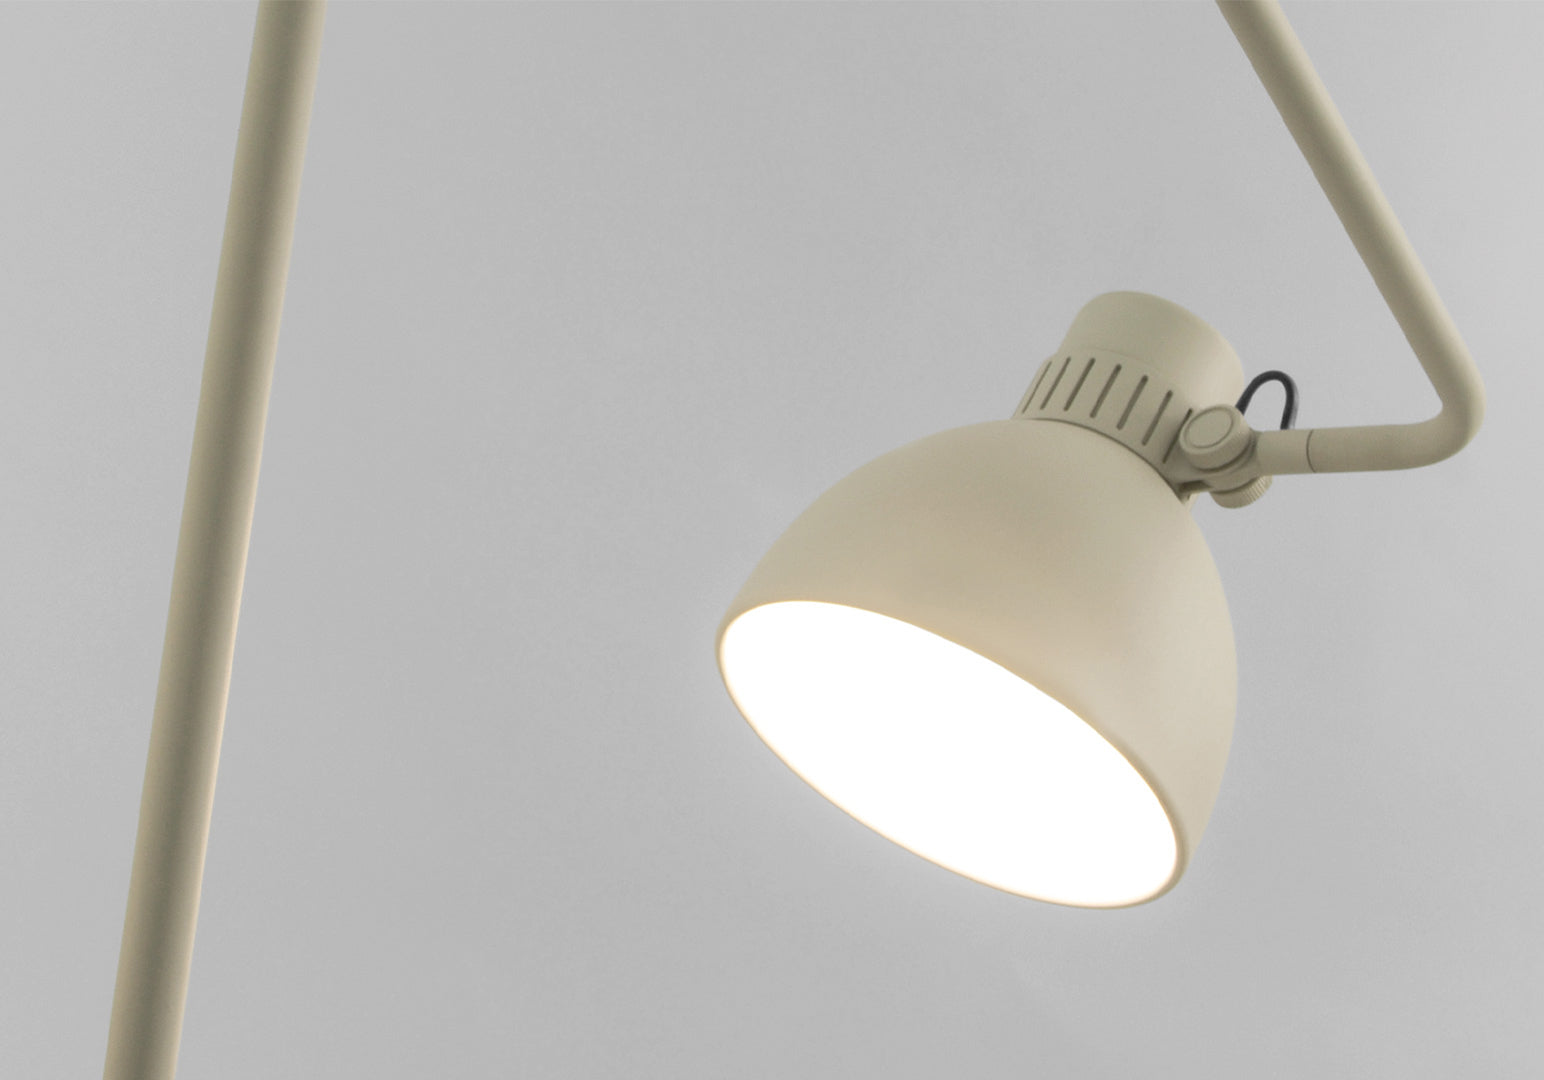 Blux System F30 Floor Lamp